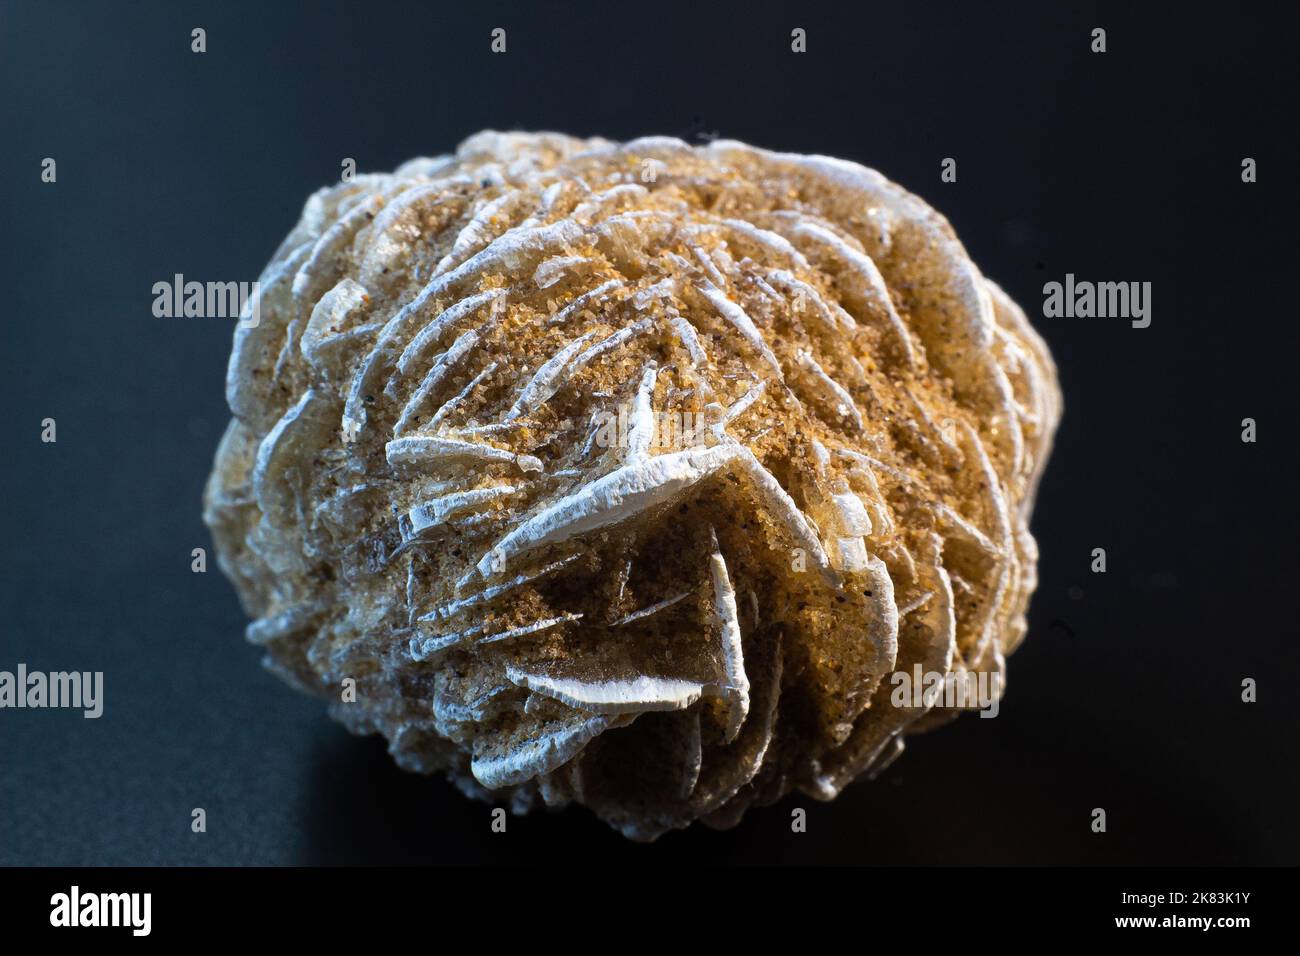 Desert rose, rock rose gypsum crystal cluster on black surface Stock Photo